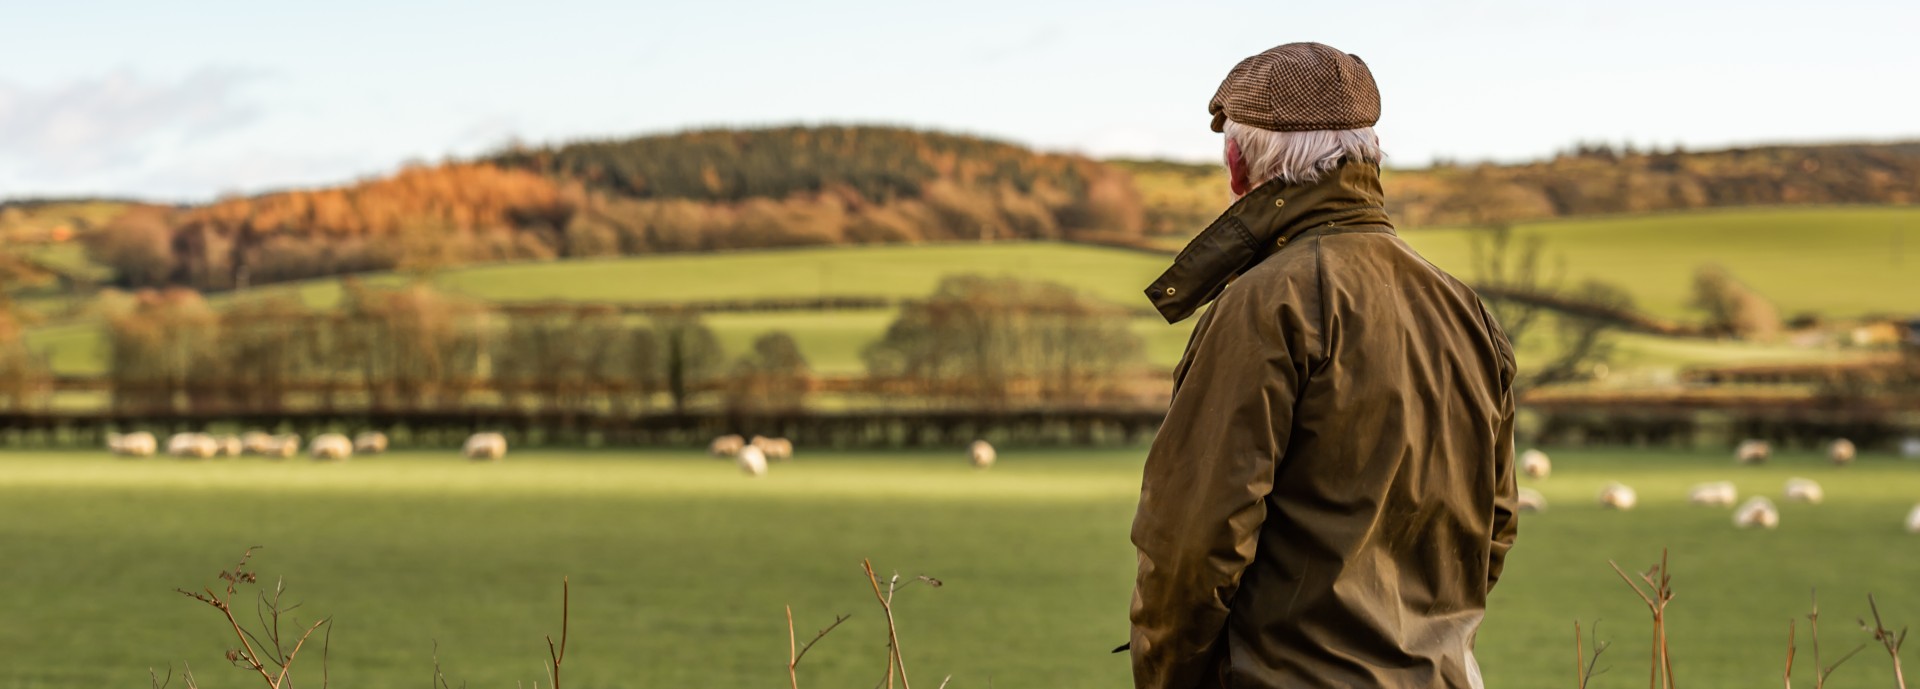 A farmer gazes out towards a field of sheep.